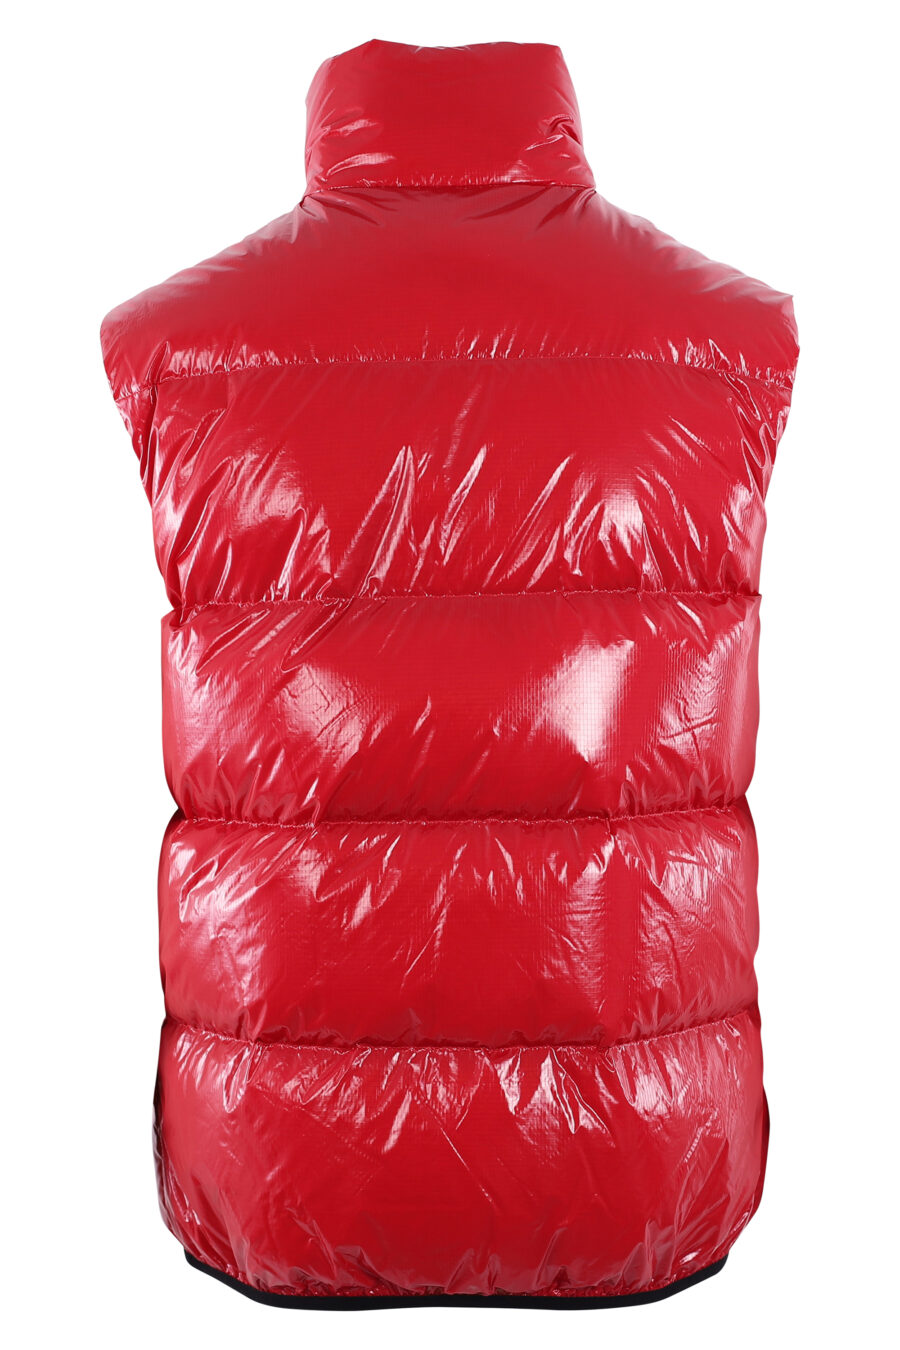 Chaleco rojo acolchado con logo negro - IMG 2879